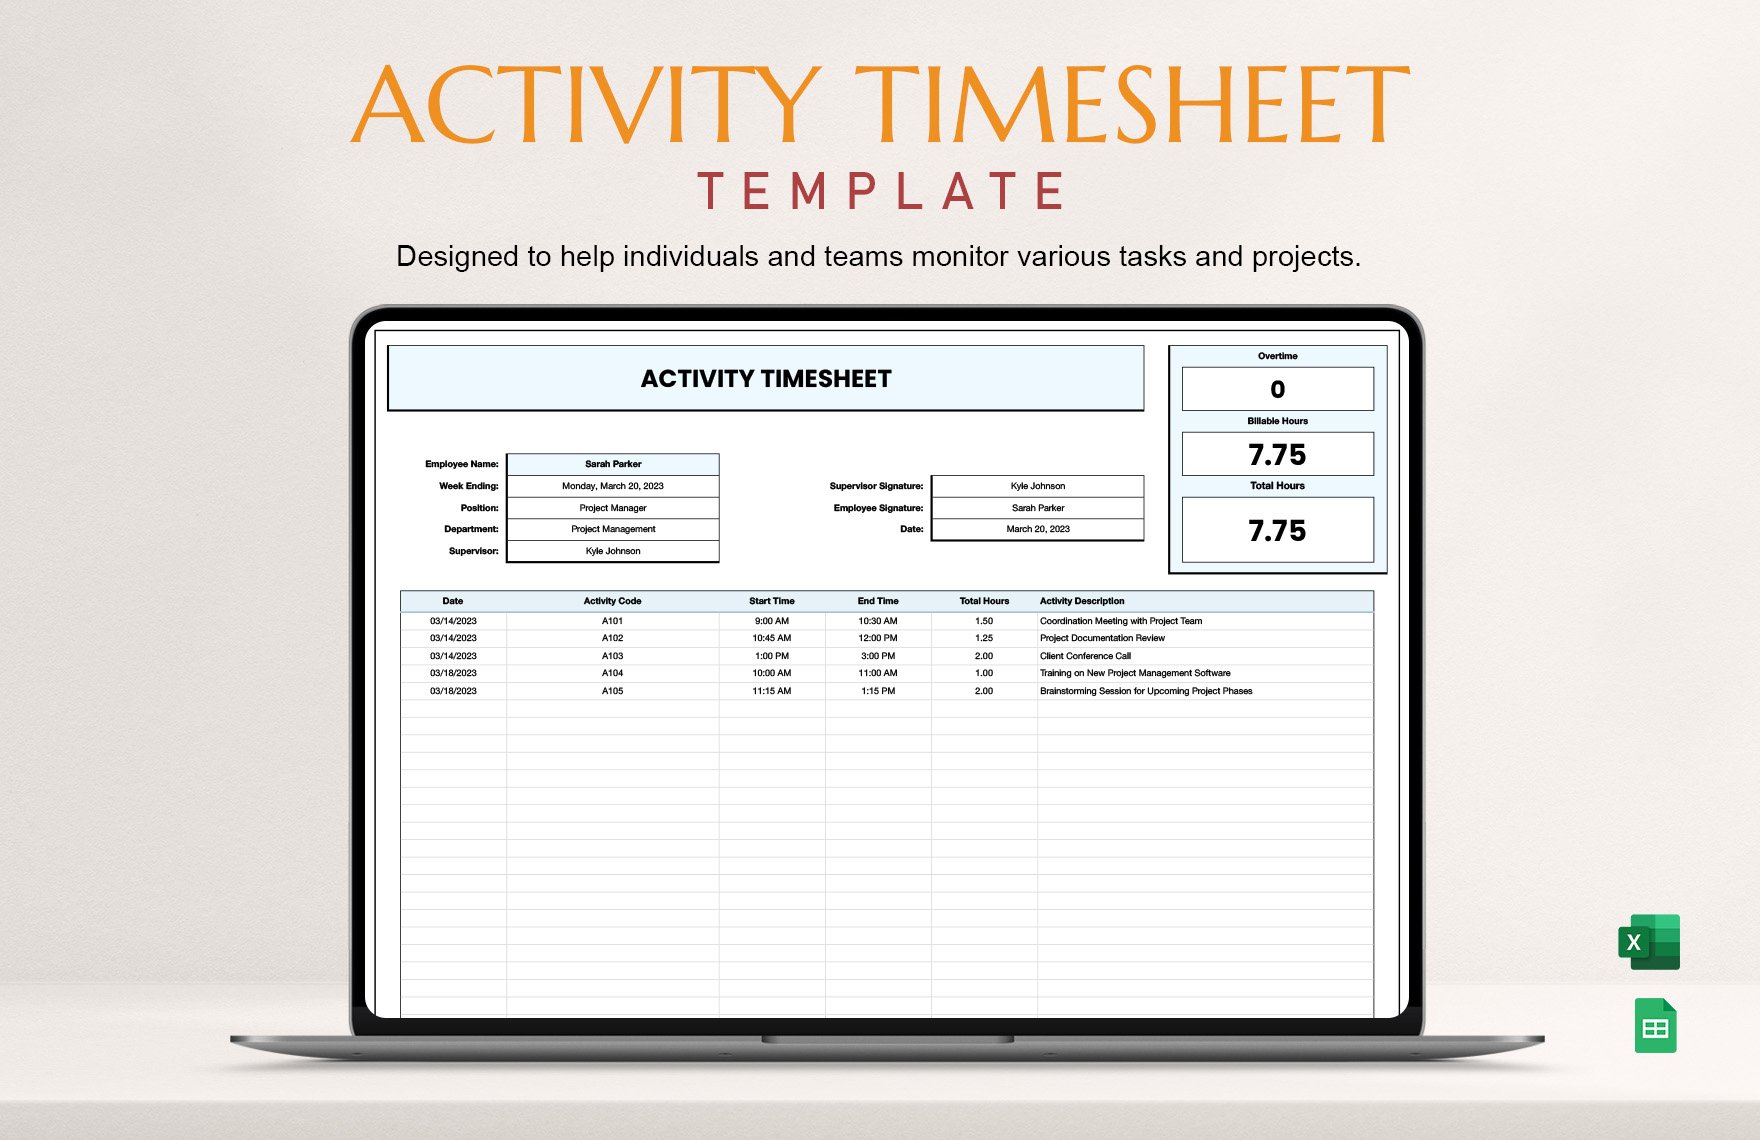 Free Activity Timesheet Template